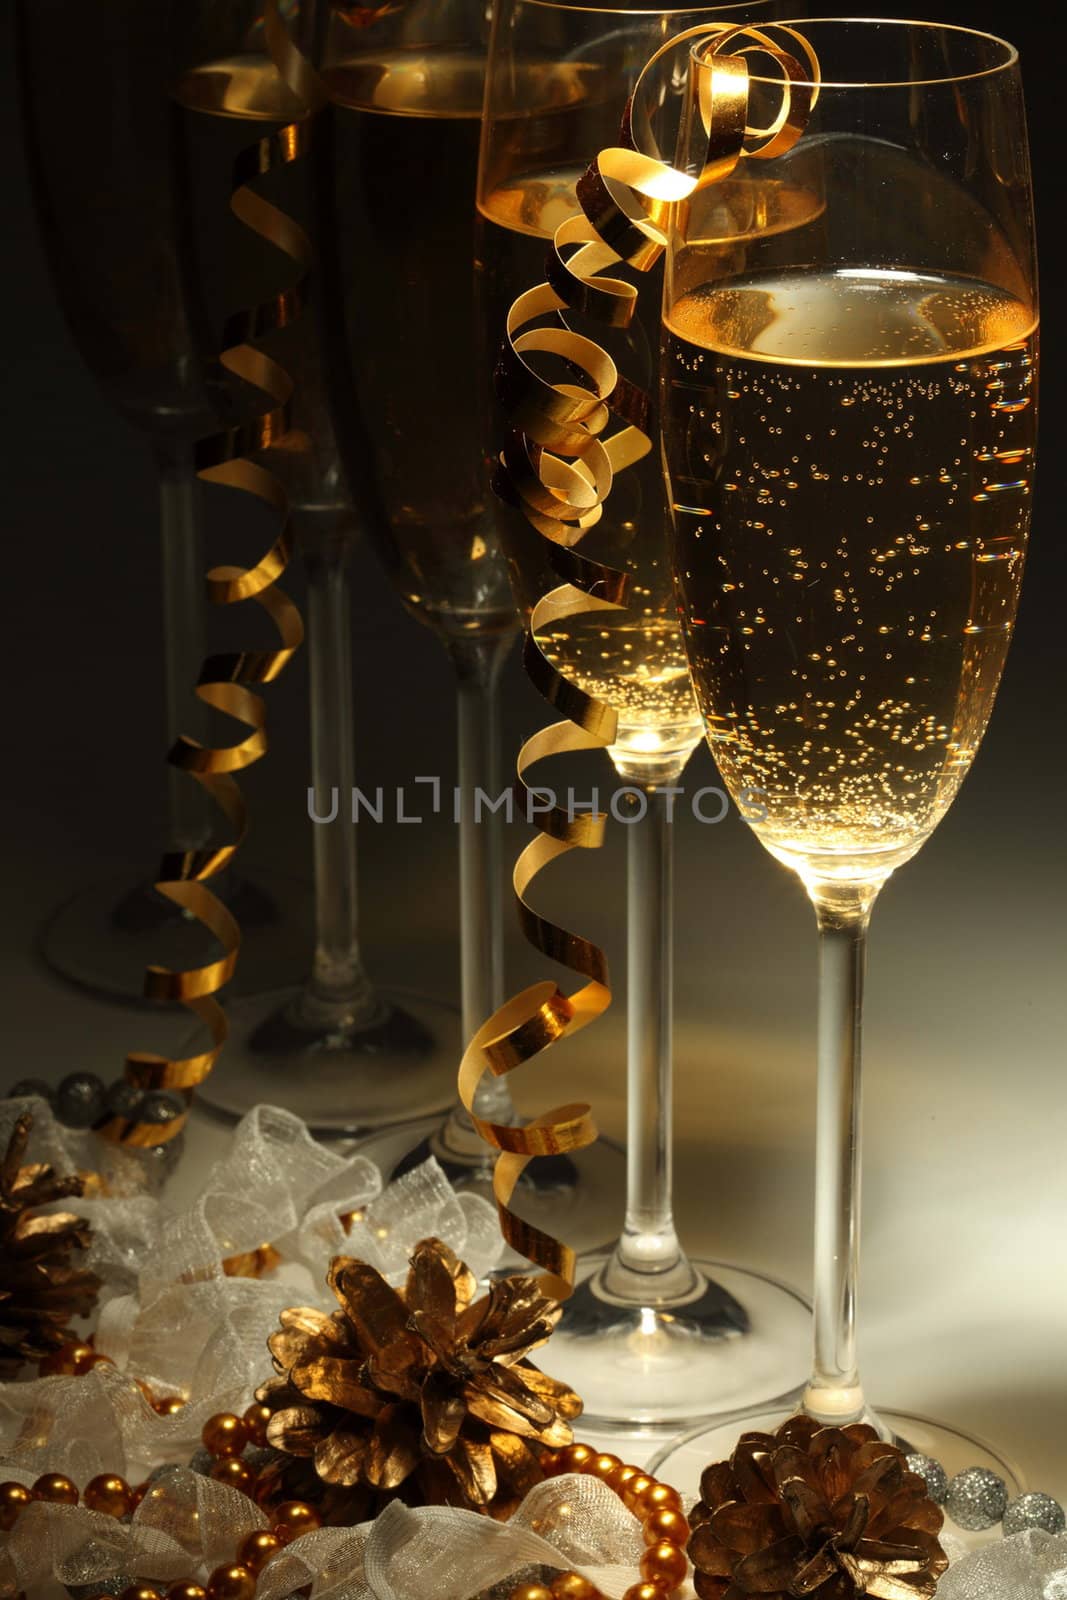 shampan by Kyzmalex